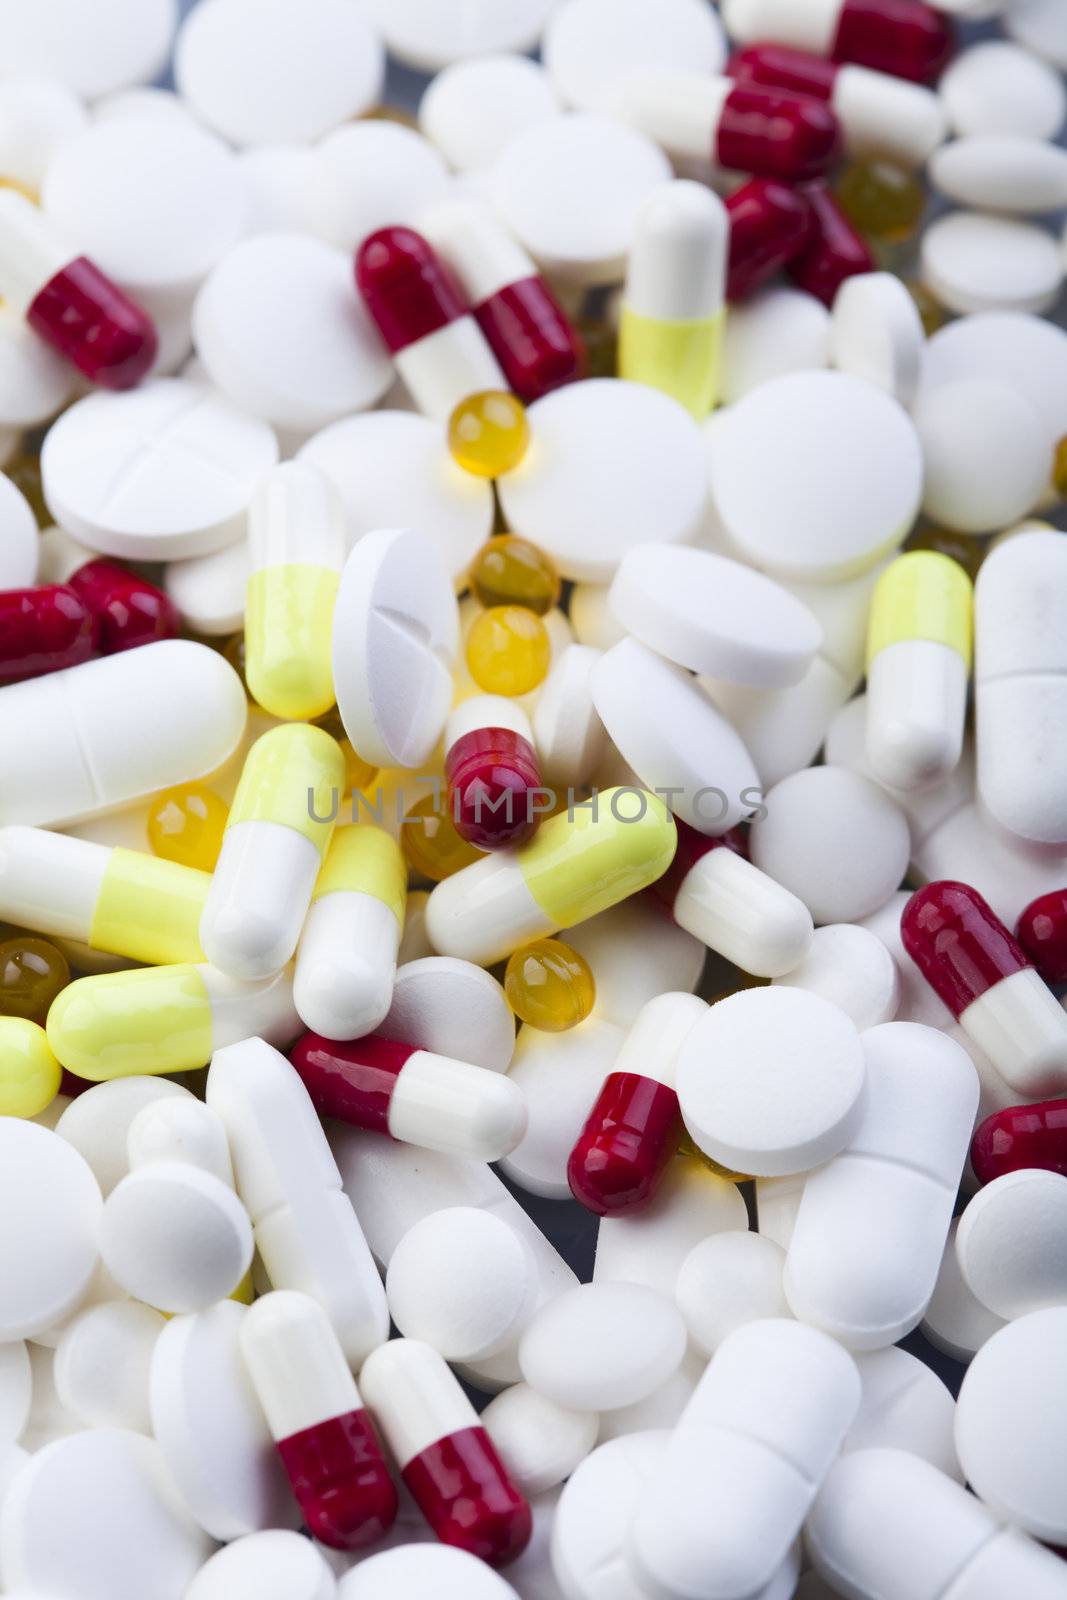 Pills and capsules by JanPietruszka